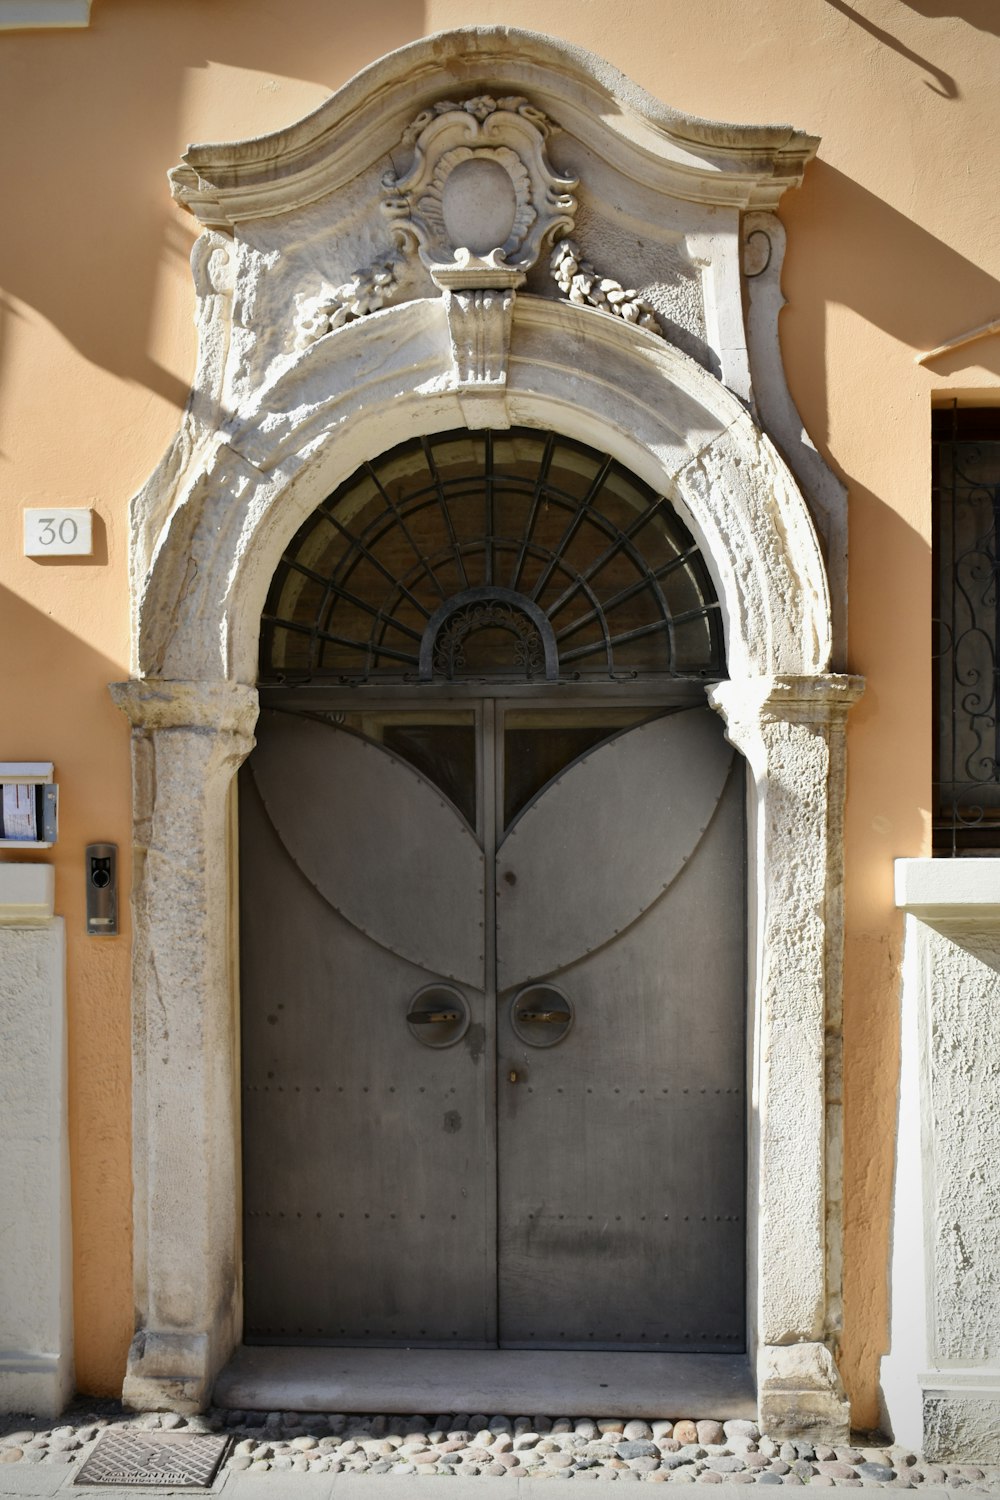 a large metal door in front of a building